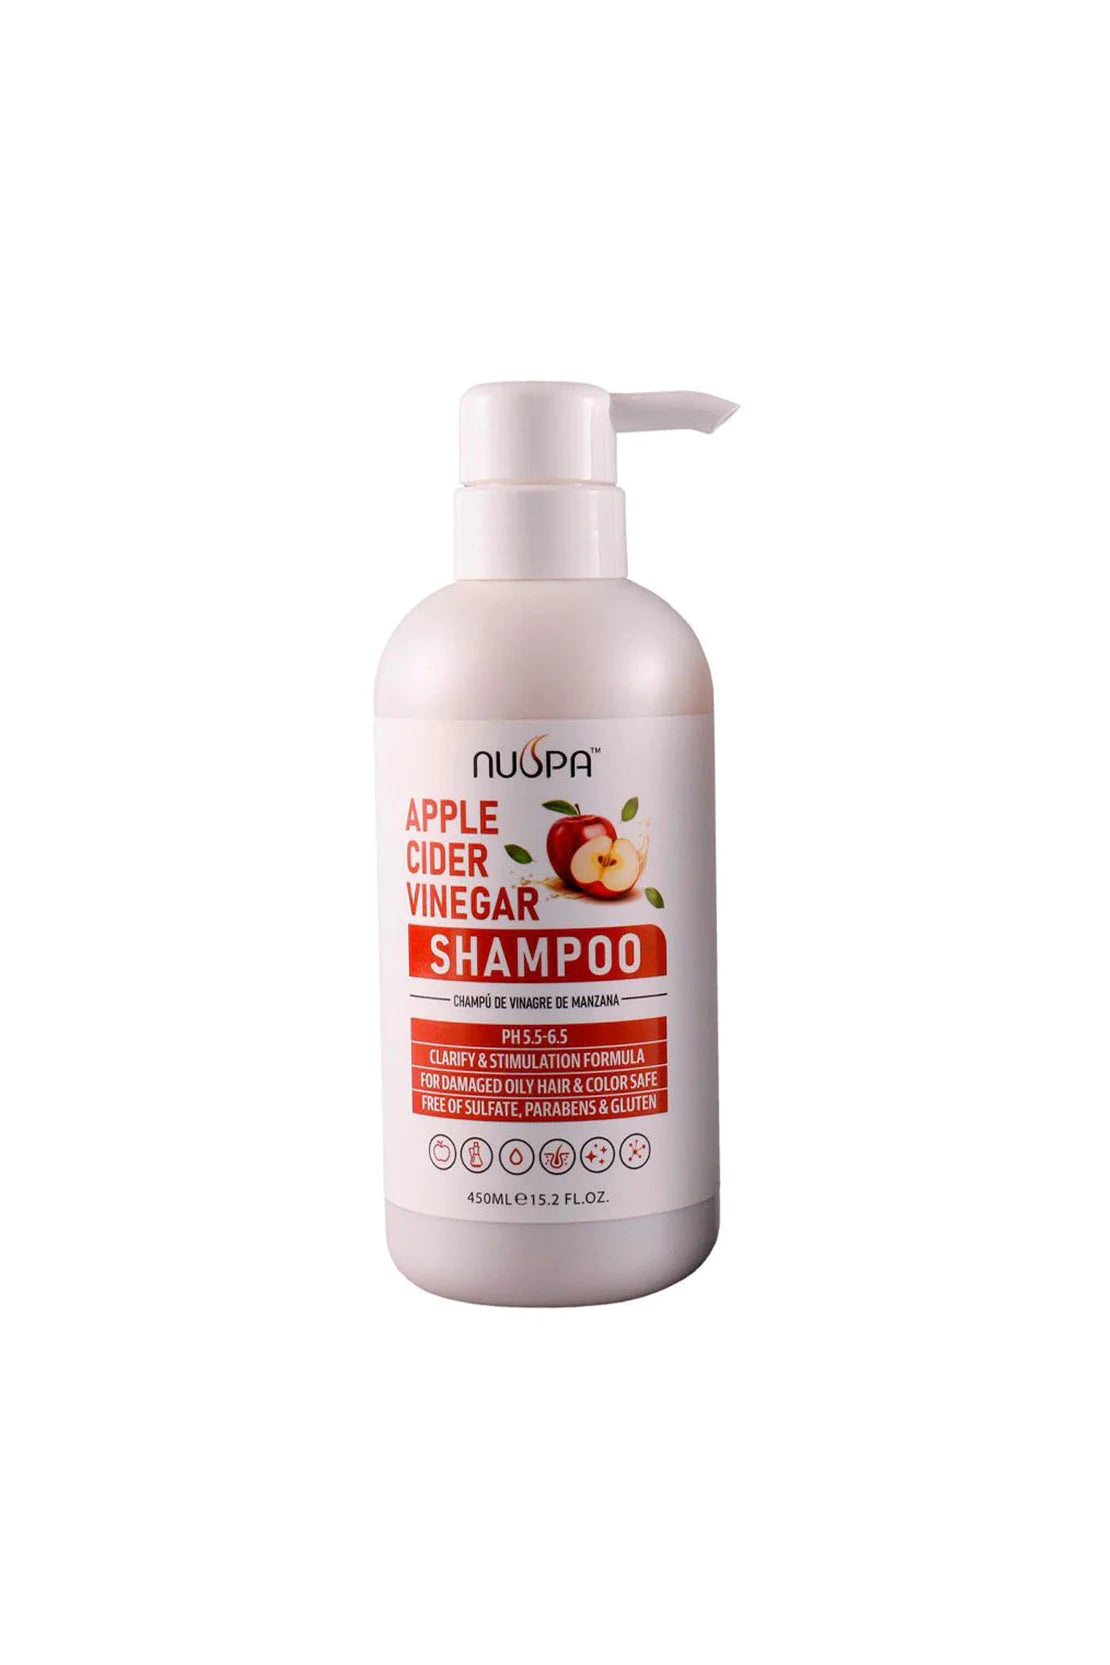 Nuspa Apple Cider Veniger Shampoo 450ml